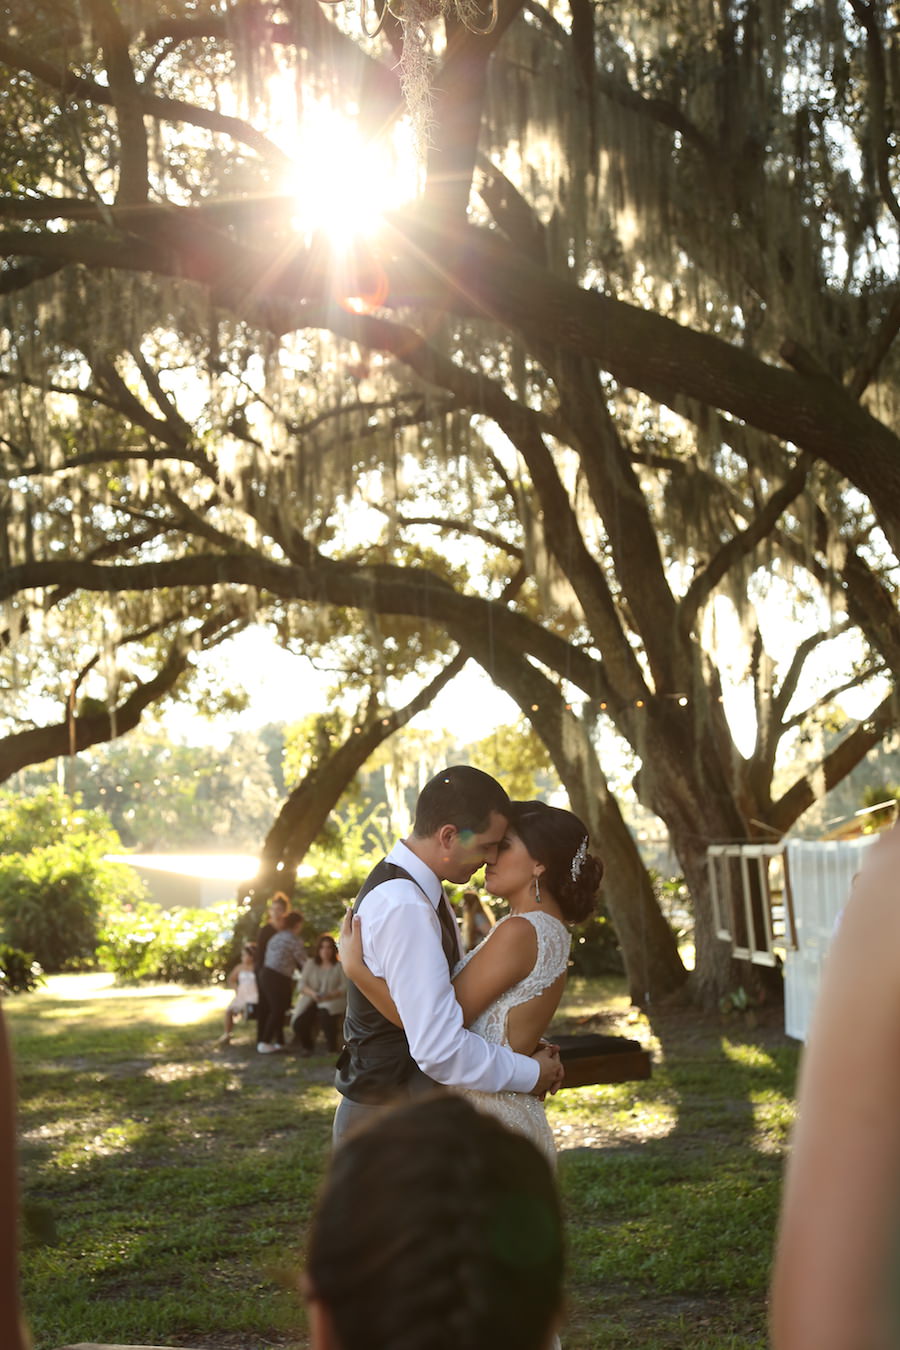 Florida Bride and Groom First Dance | Outdoor Wedding Reception at Lakeland Wedding Venue Rocking H Ranch